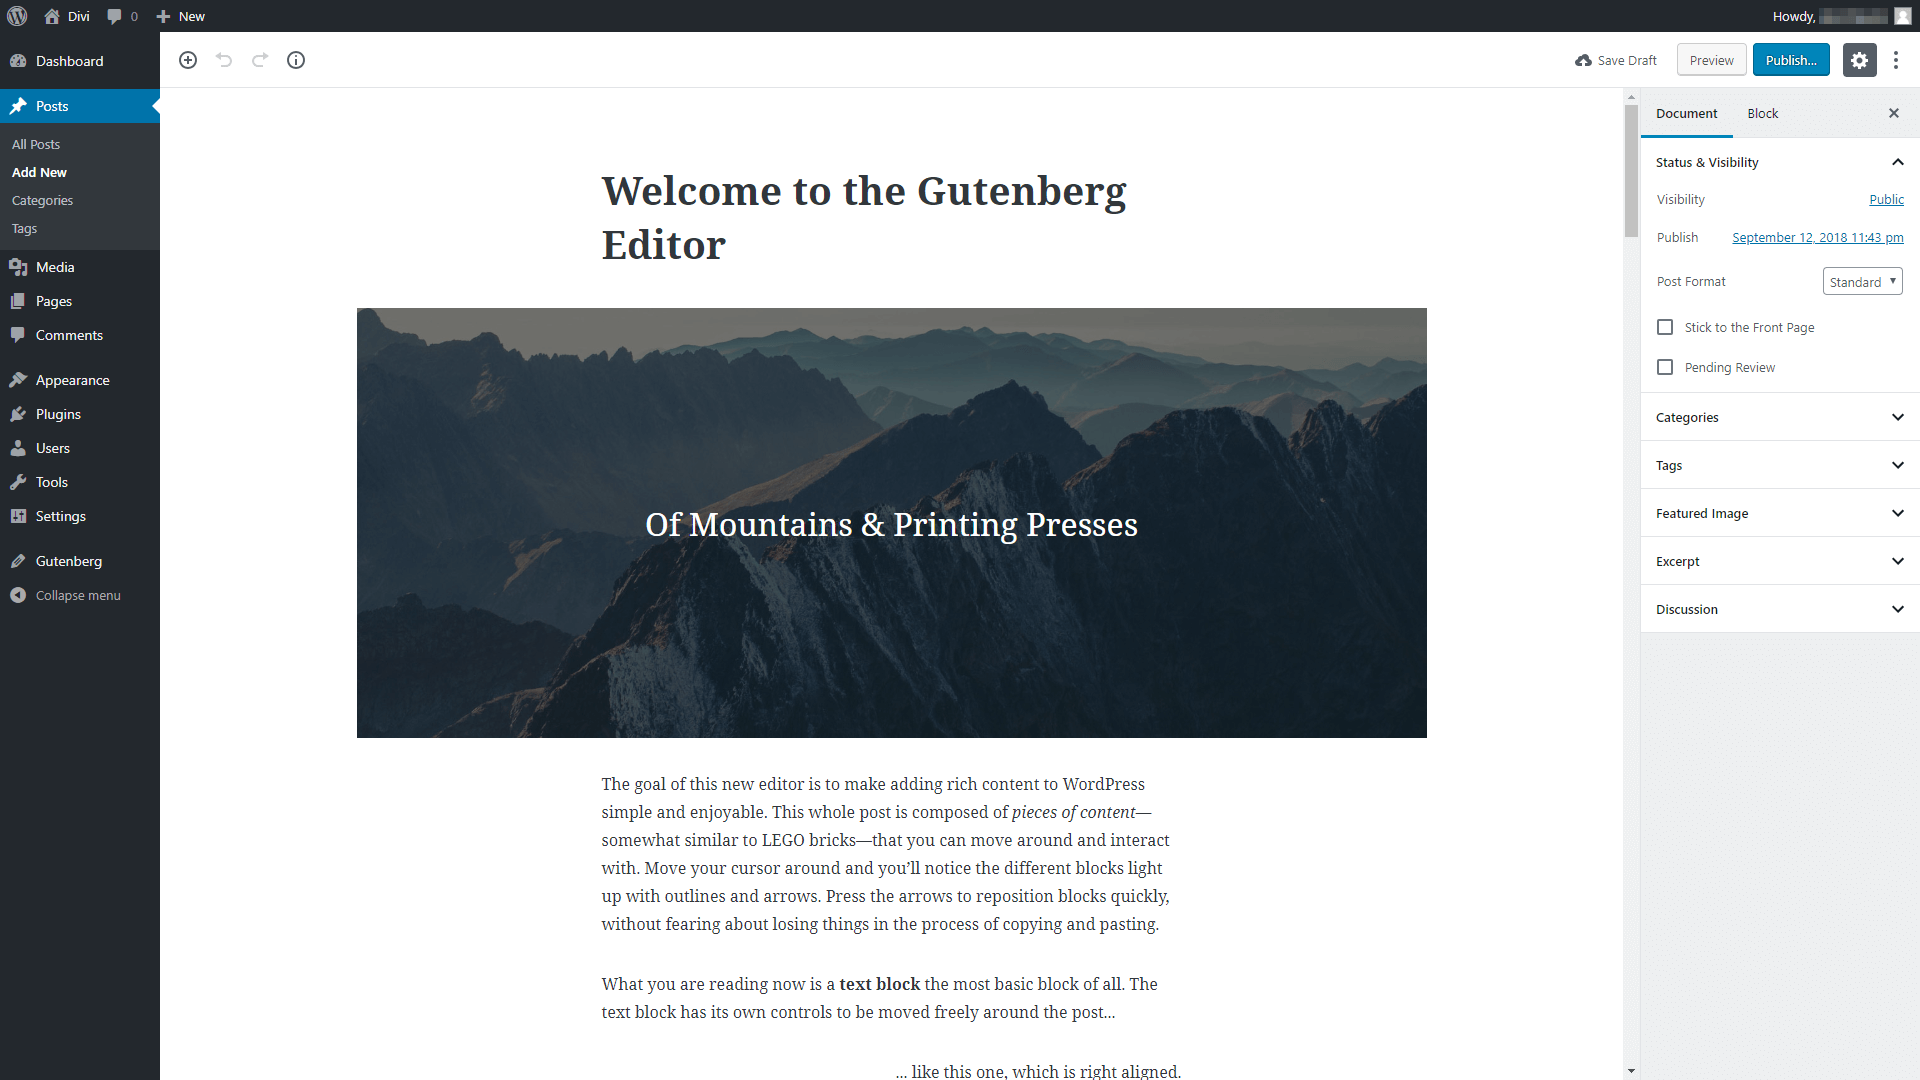 The Gutenberg Editor.